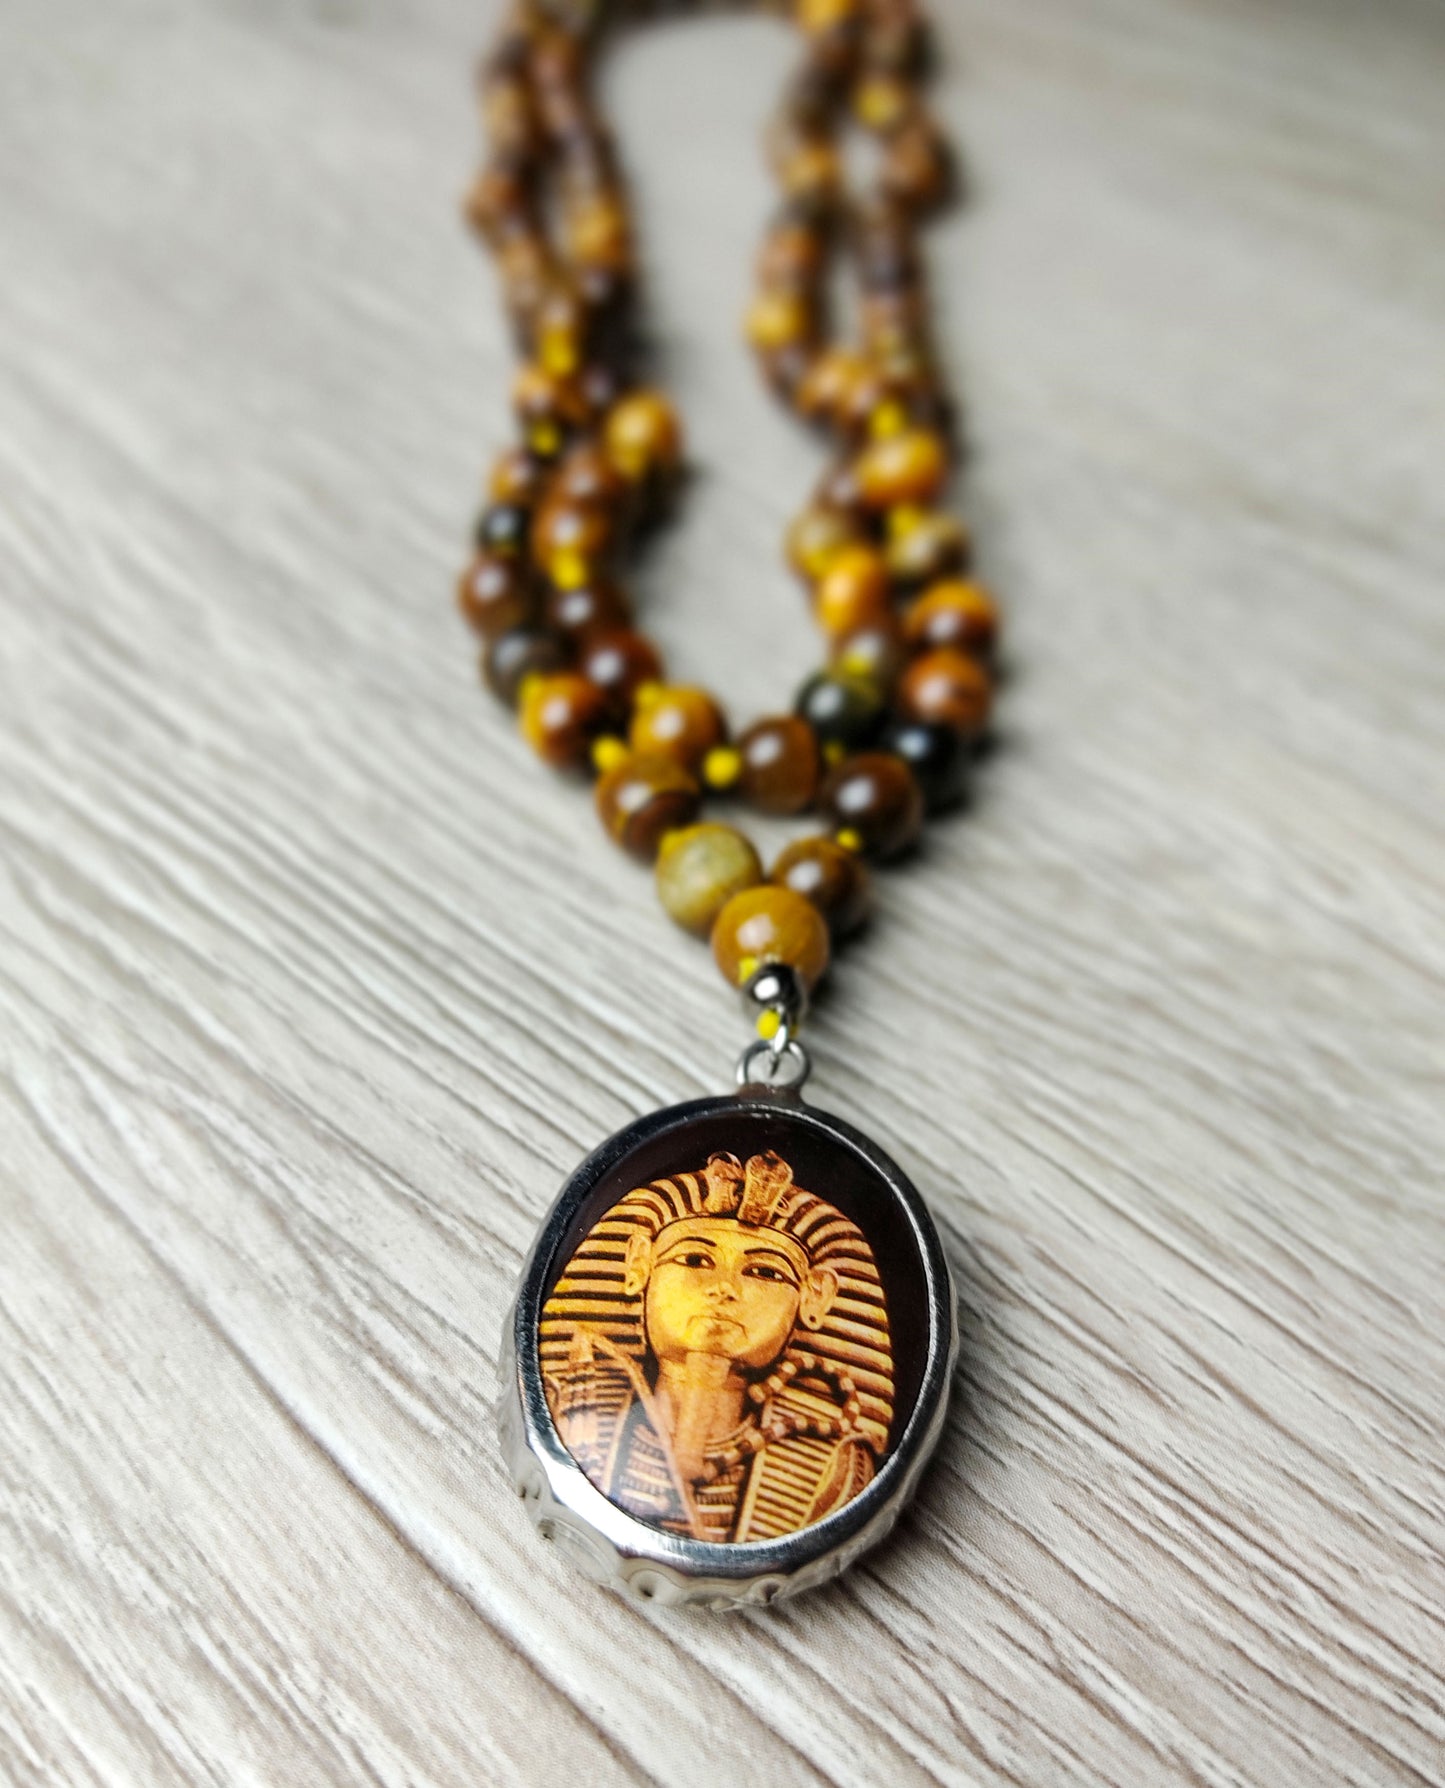 Egypt King Tutankhamun Pendant with Real Tiger Eye Beads Mala Necklace 34"